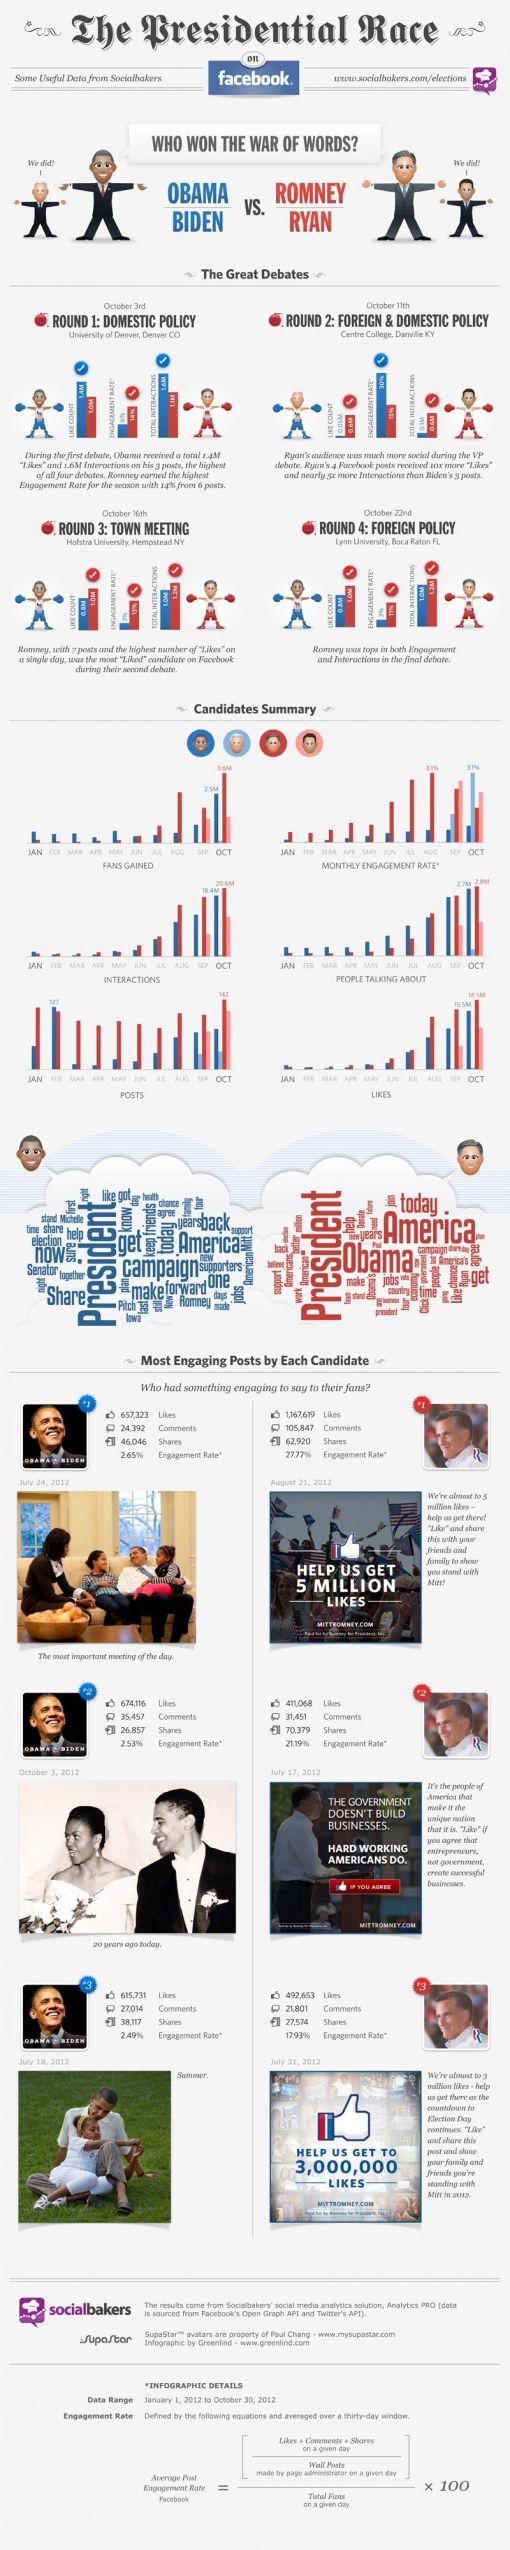 infographic-obama-v-romney-final1